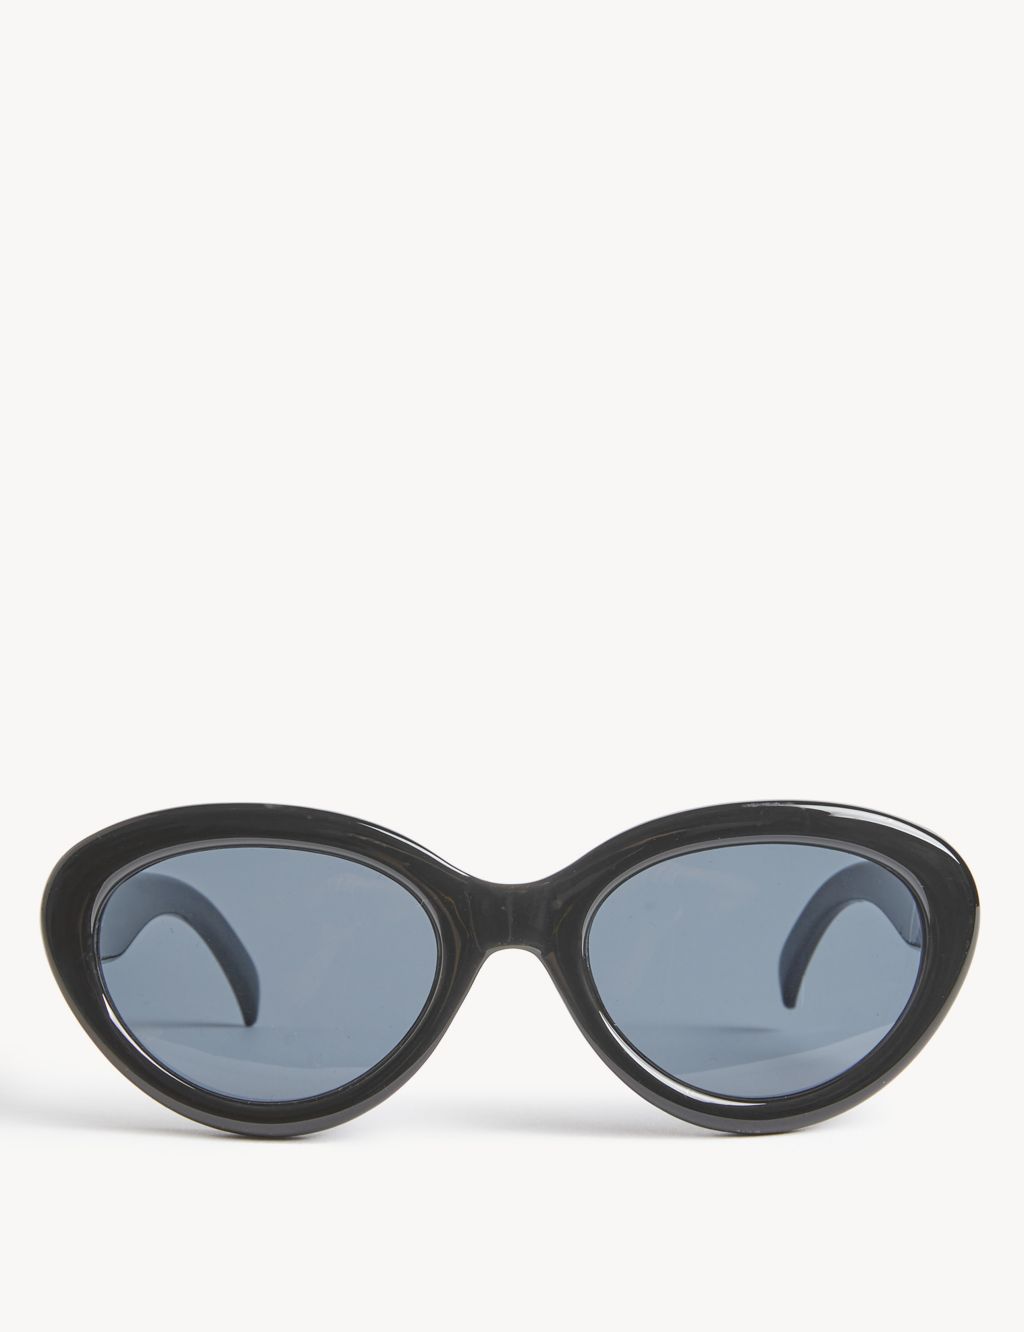 Oval Cat Eye Sunglasses image 1